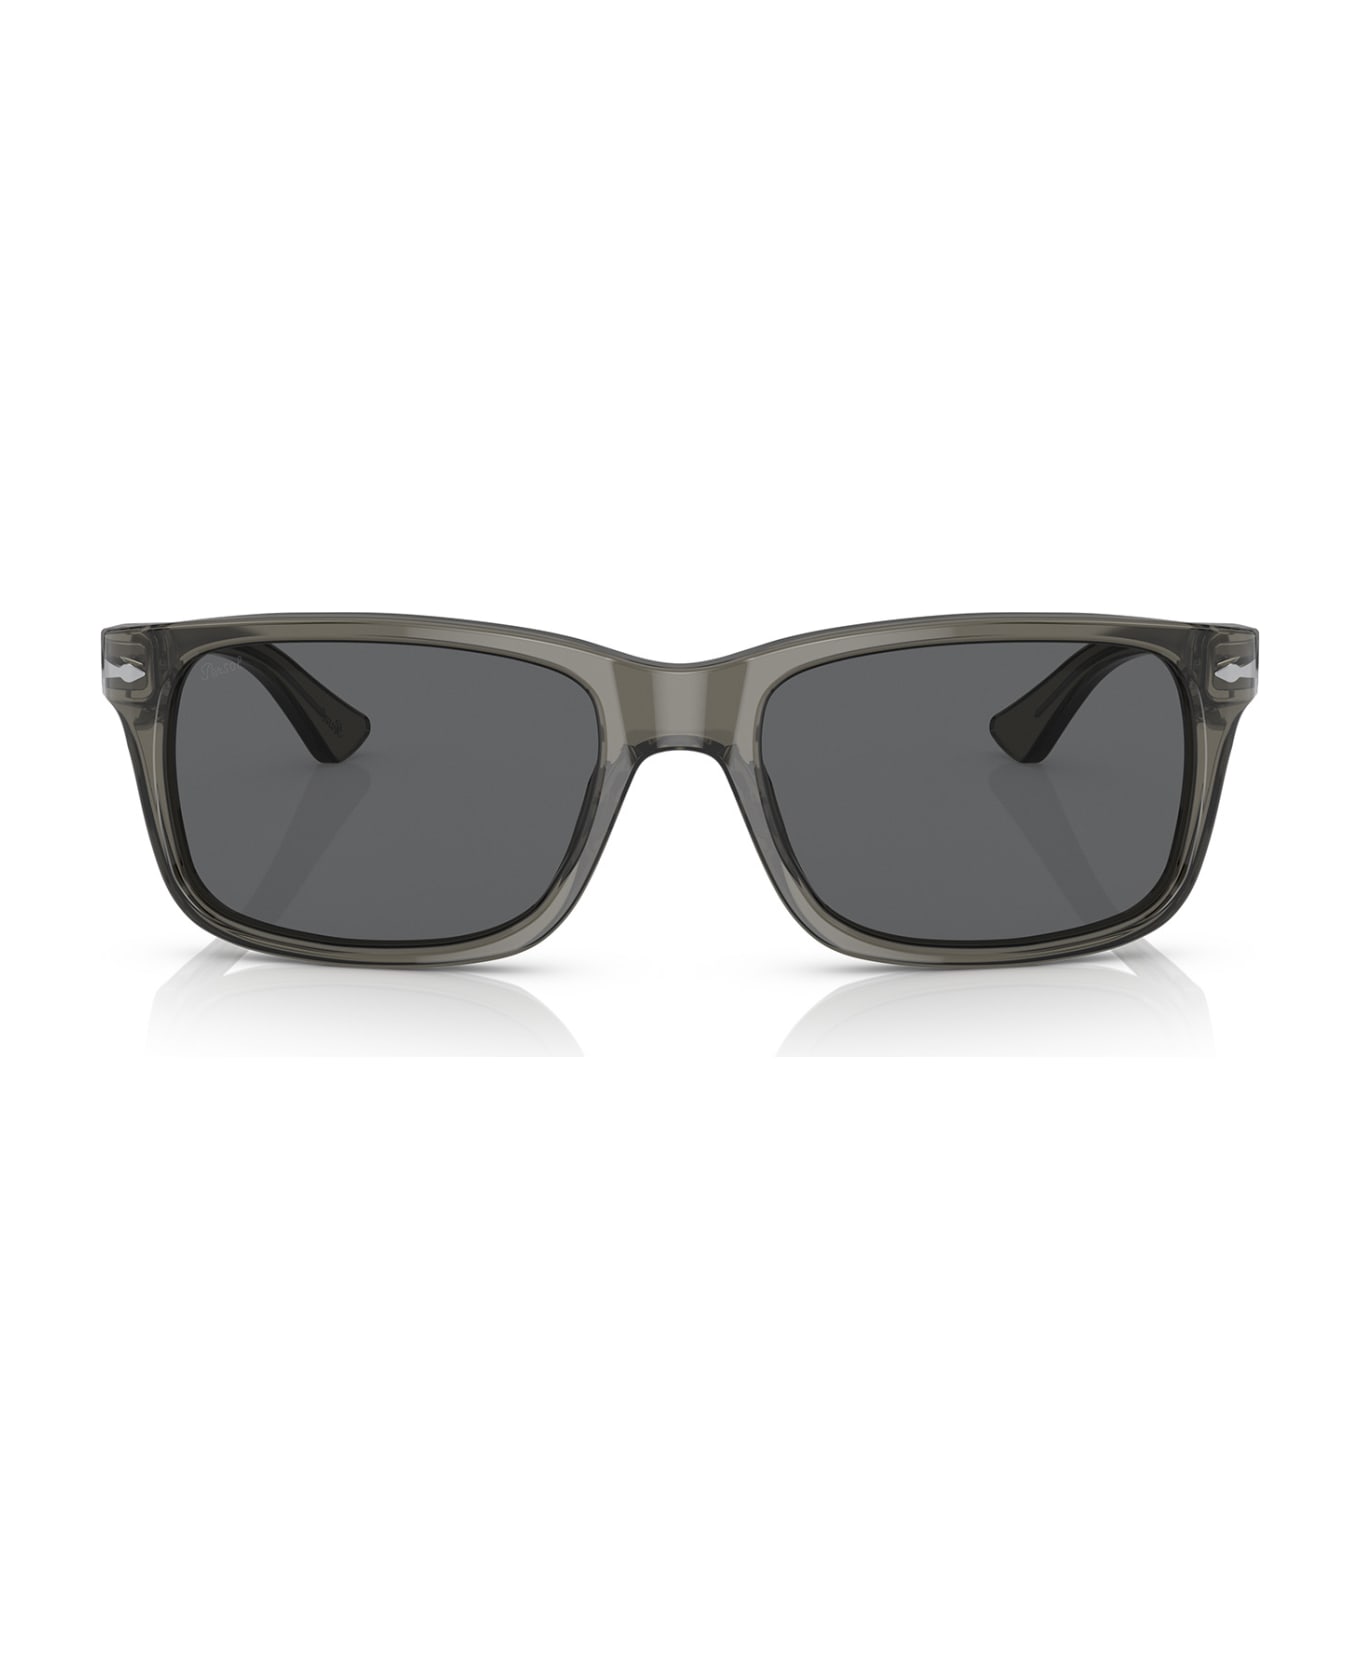 Persol Po3048s Transparent Grey Sunglasses - Transparent Grey